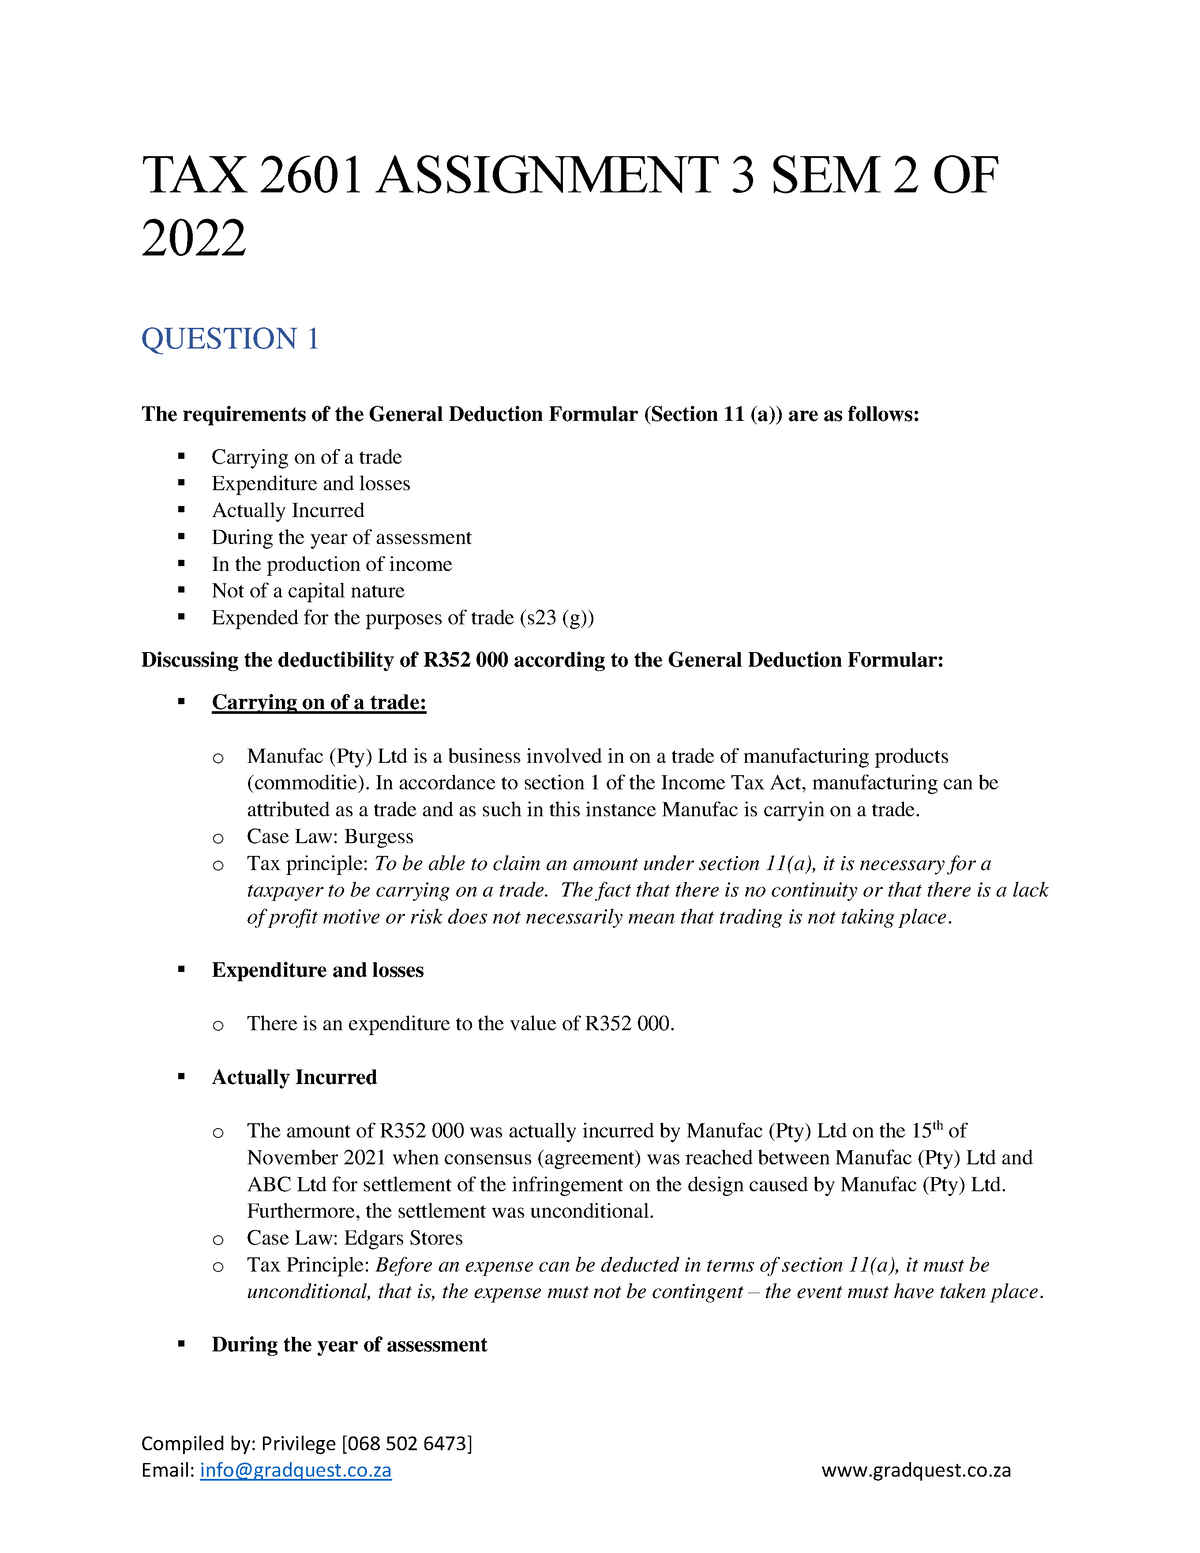 assignment tax 2022